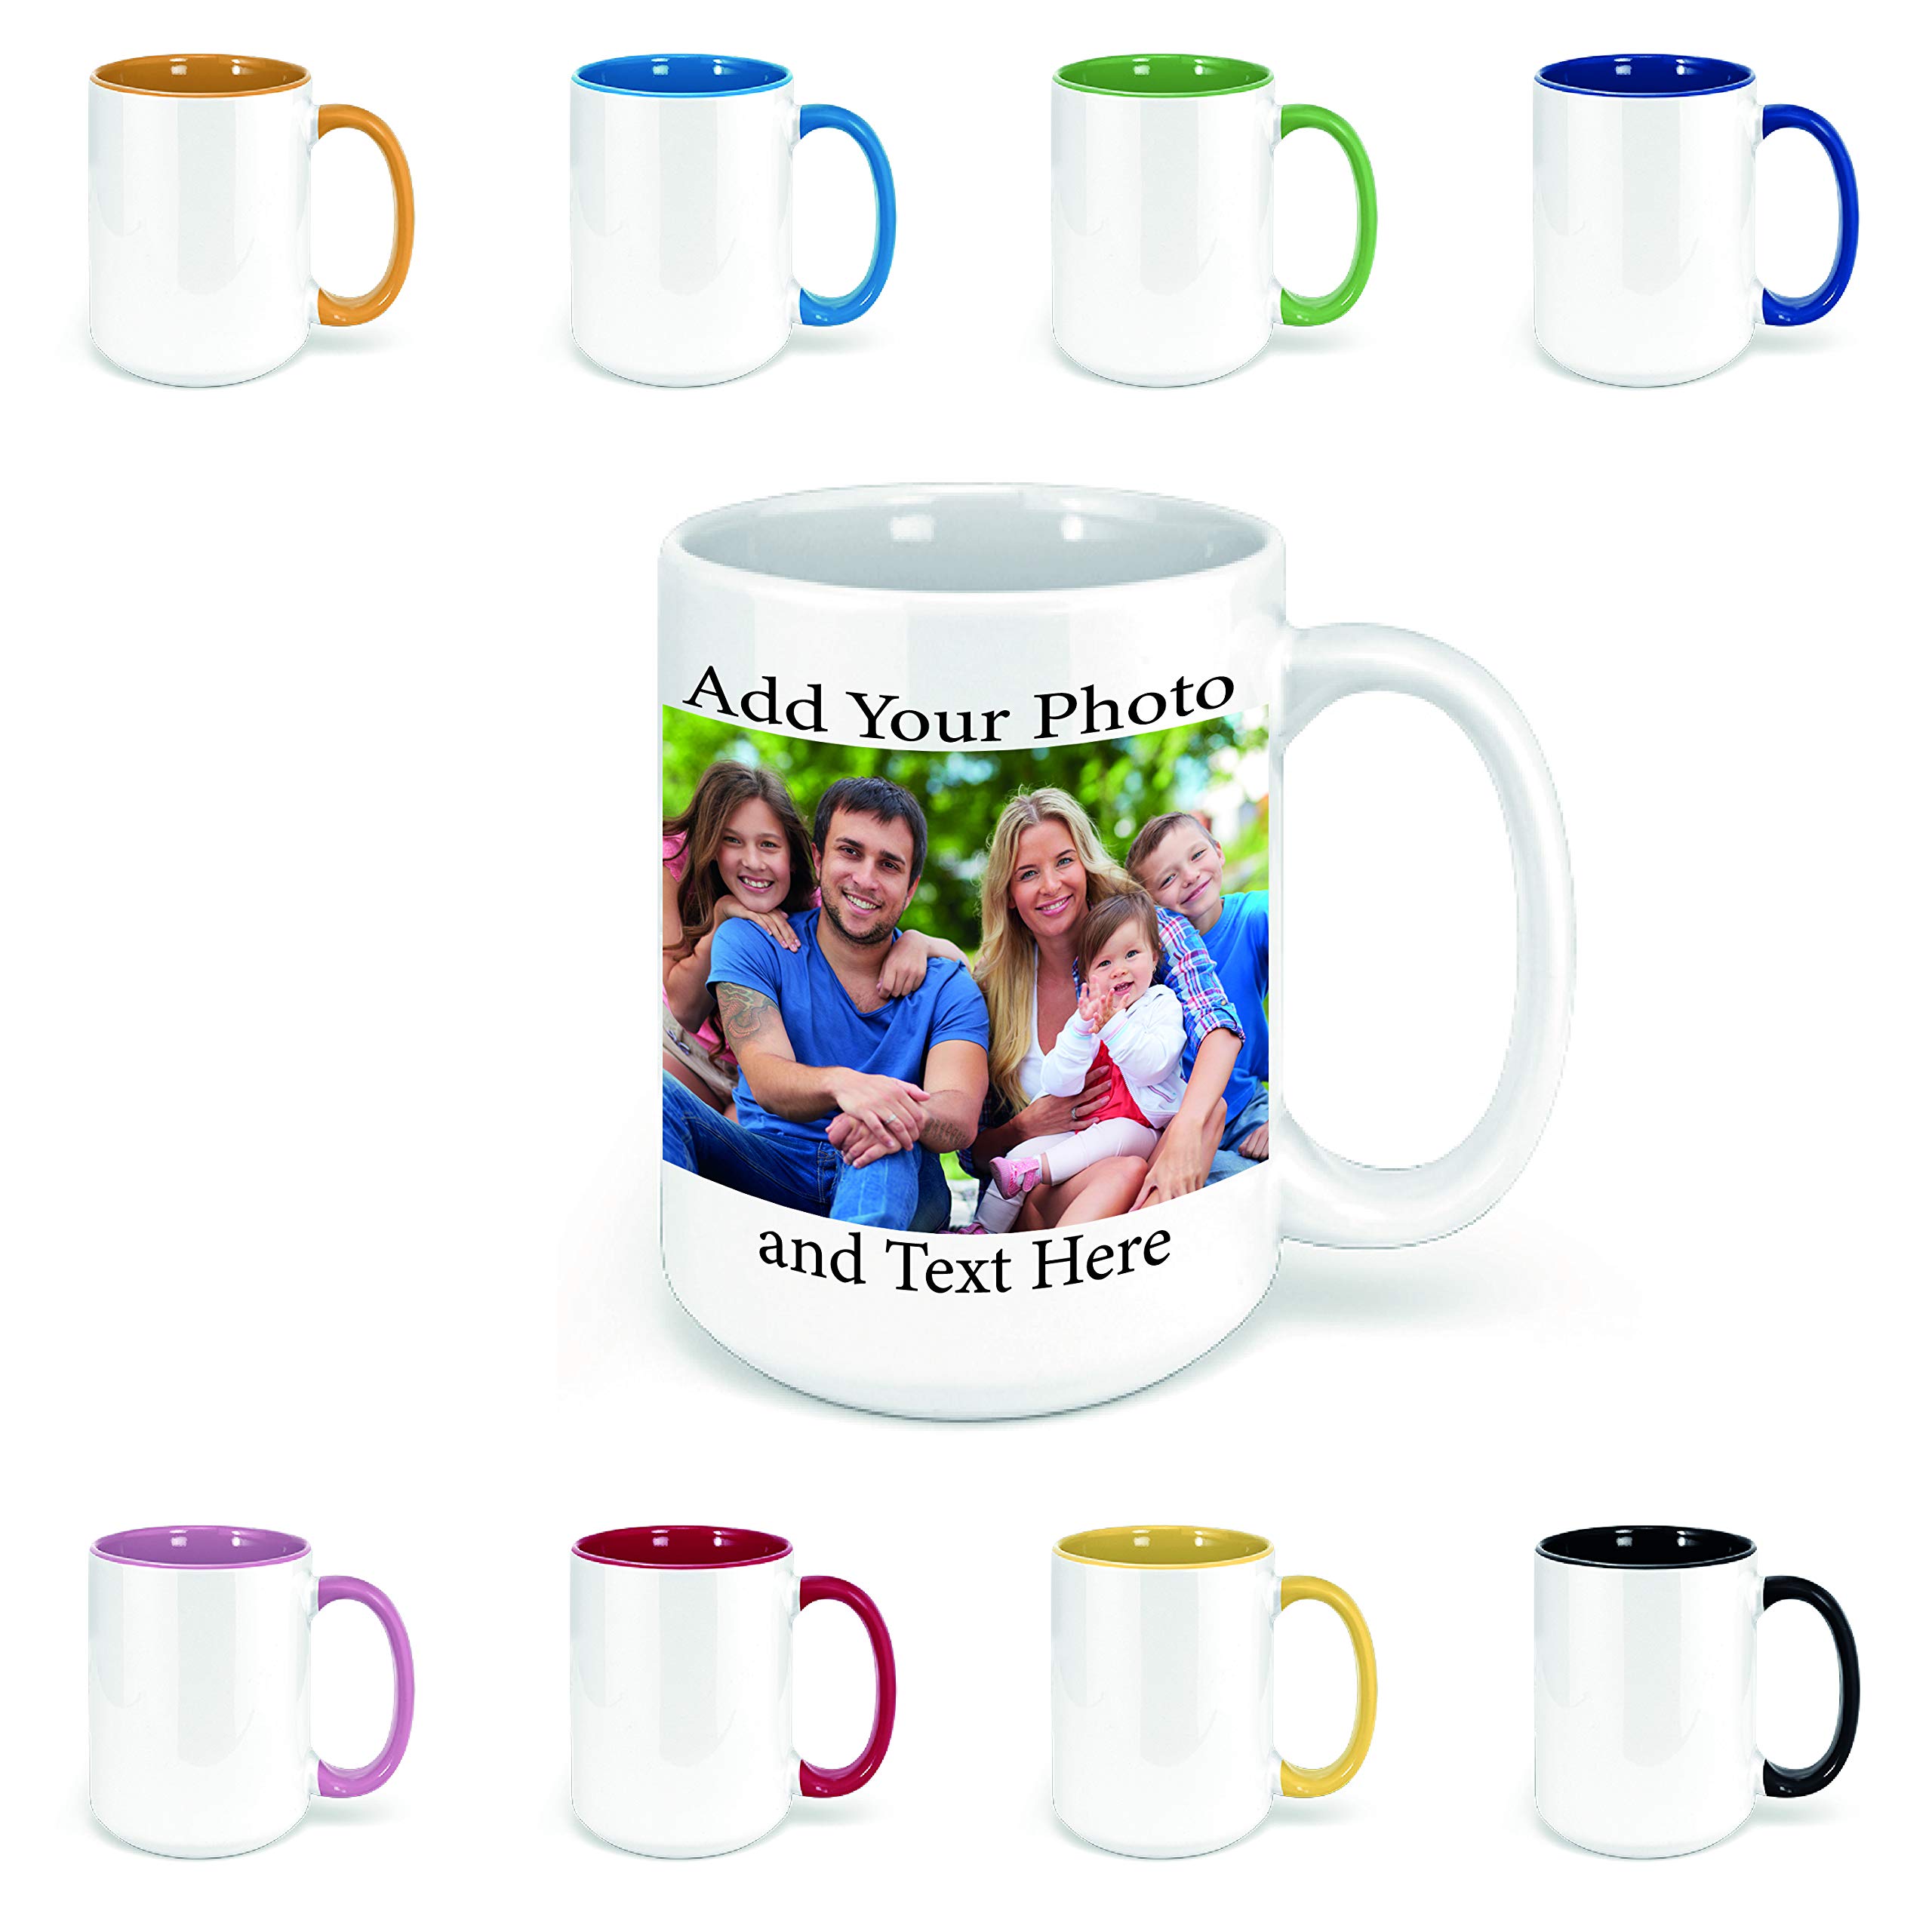 Brd Gifts custom coffee Mugs - Personalized coffee Mugs with Photo Text, customized ceramic coffee Mug - customizable Mug, Funny Mug, Pers